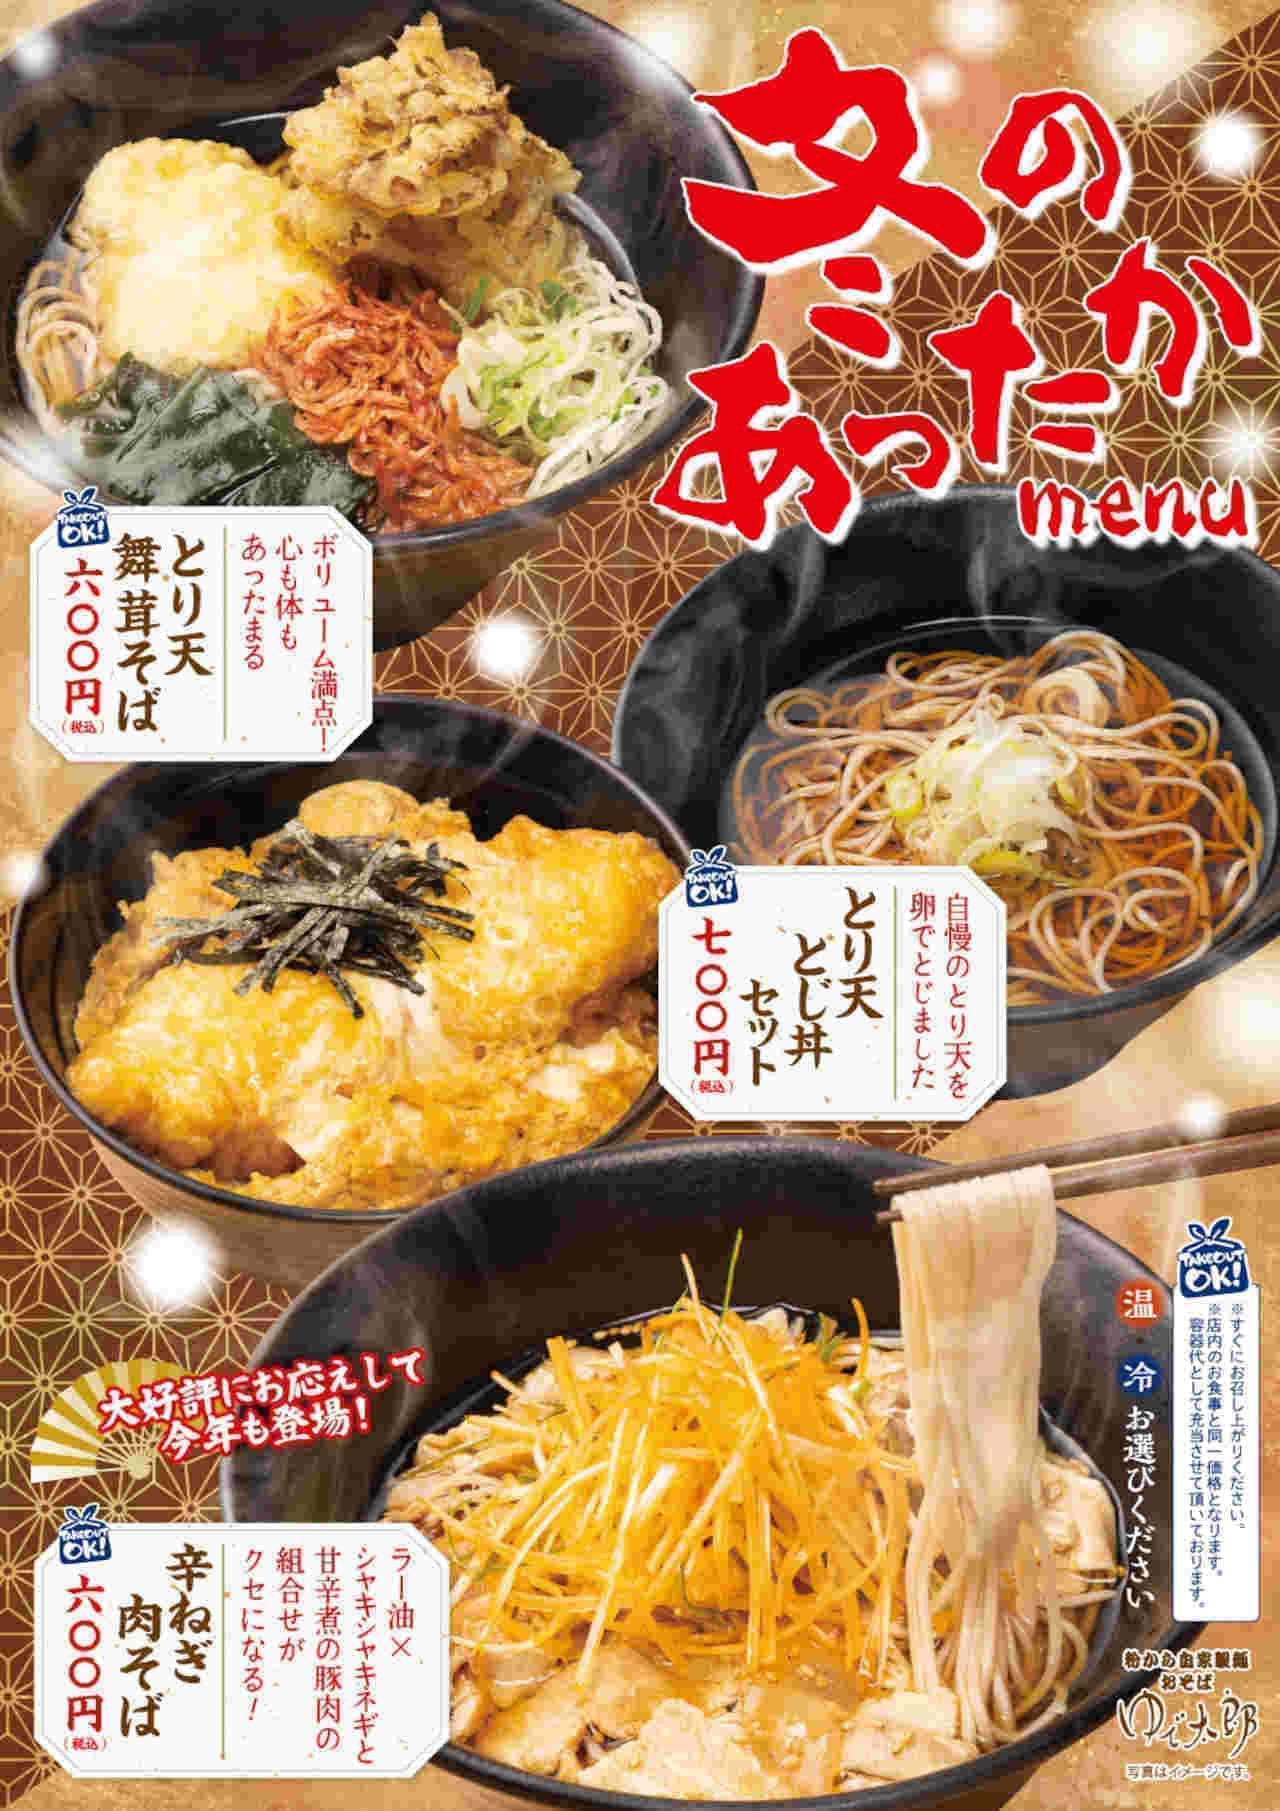 YUDETARO "Toriten Maitake Soba", "Toriten Tsuji Donburi Set", "Spicy Negi Meat Soba".